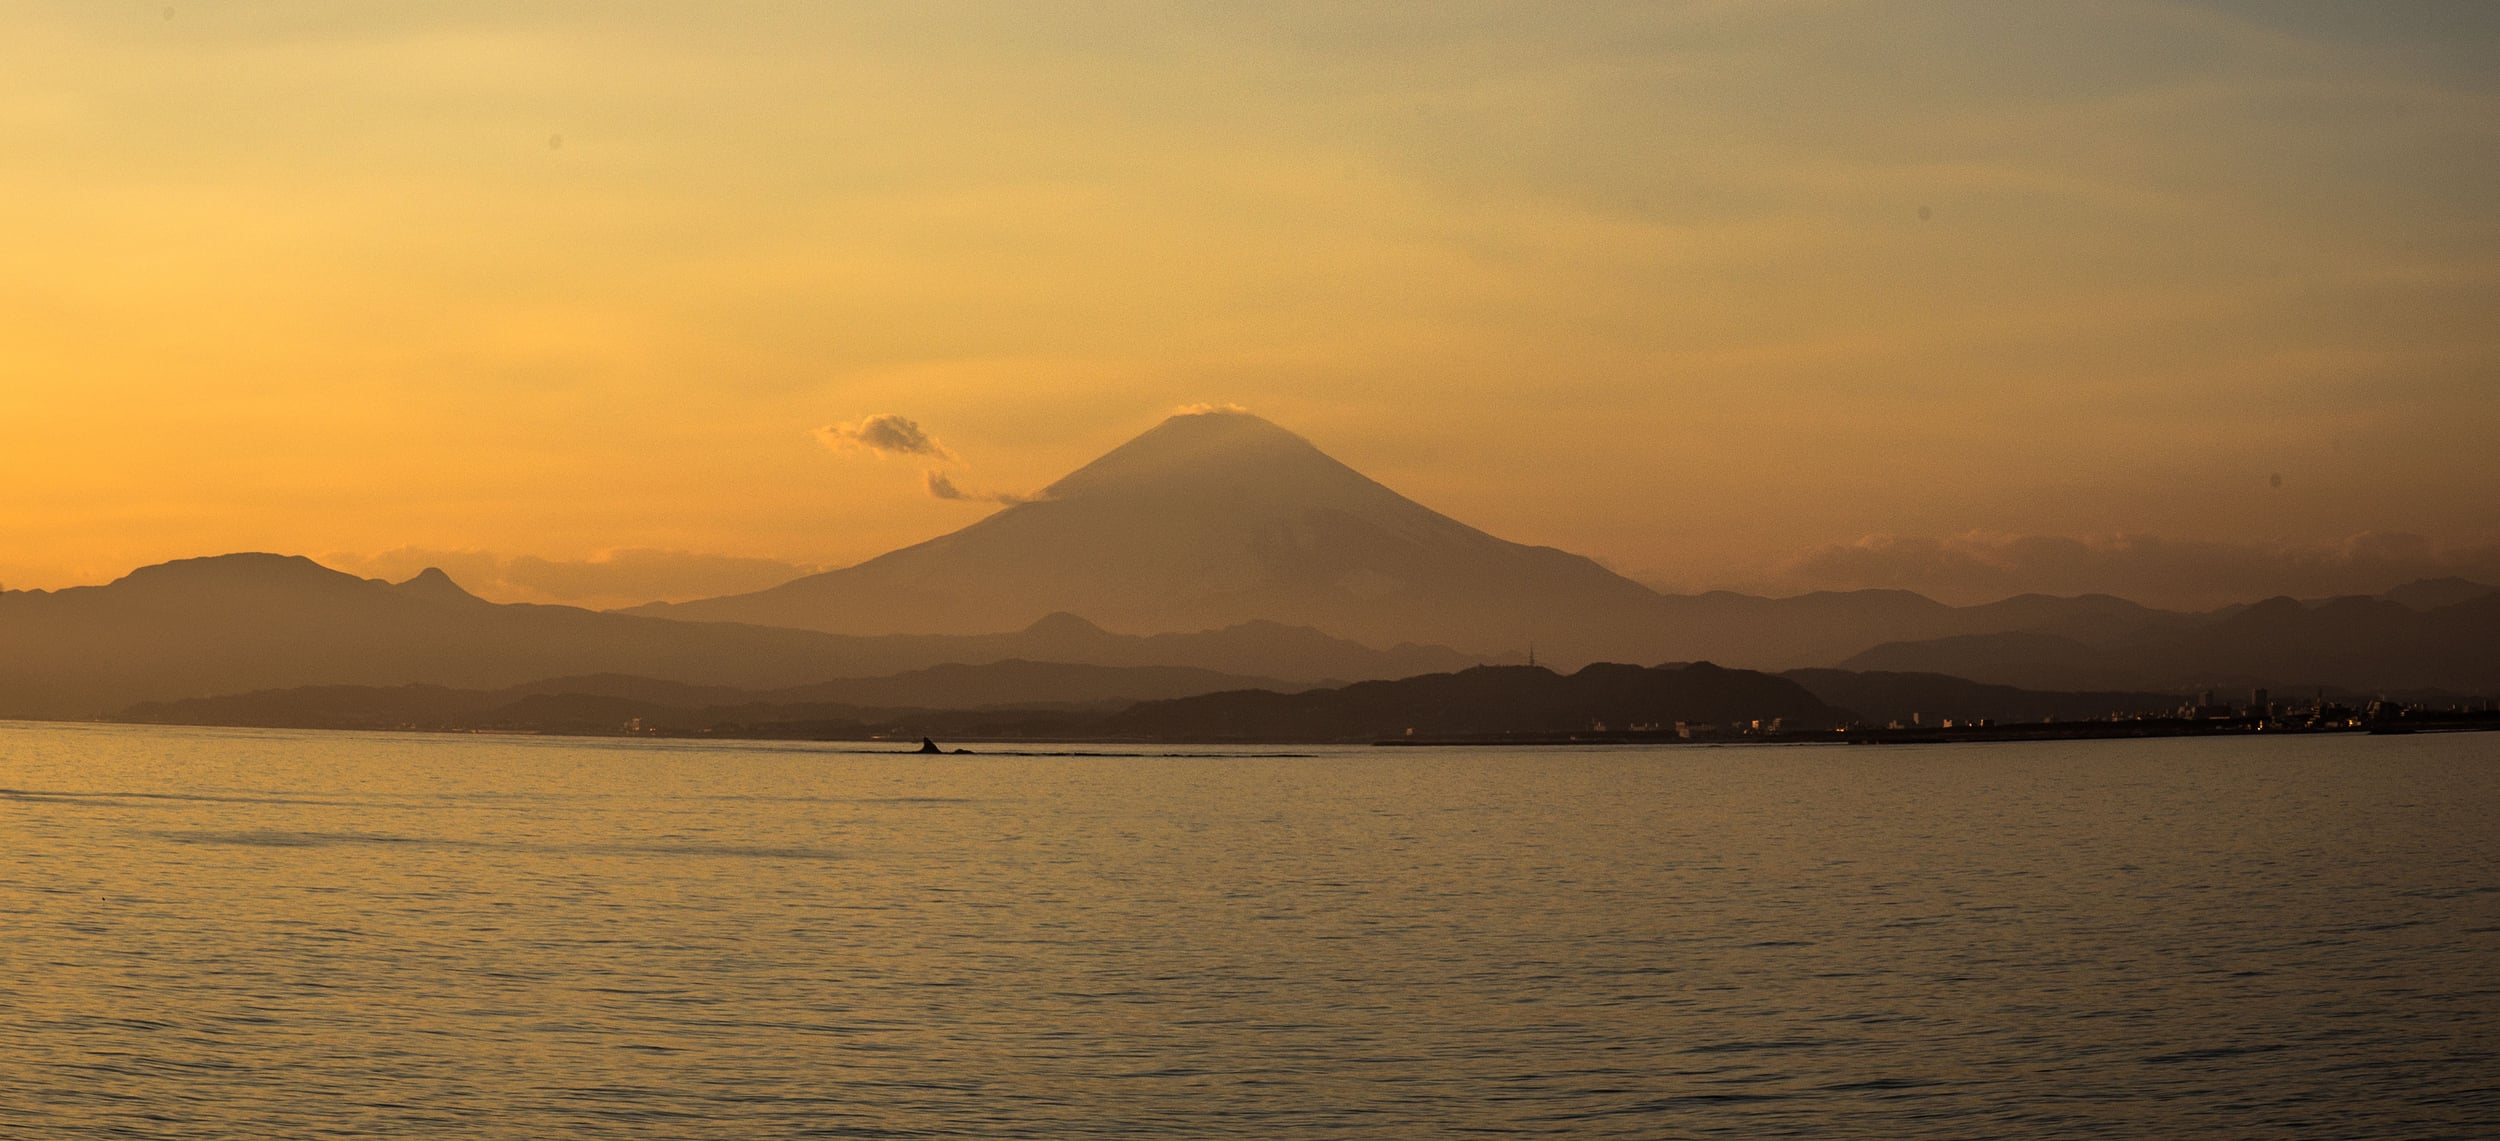 From Enoshima to Fuji